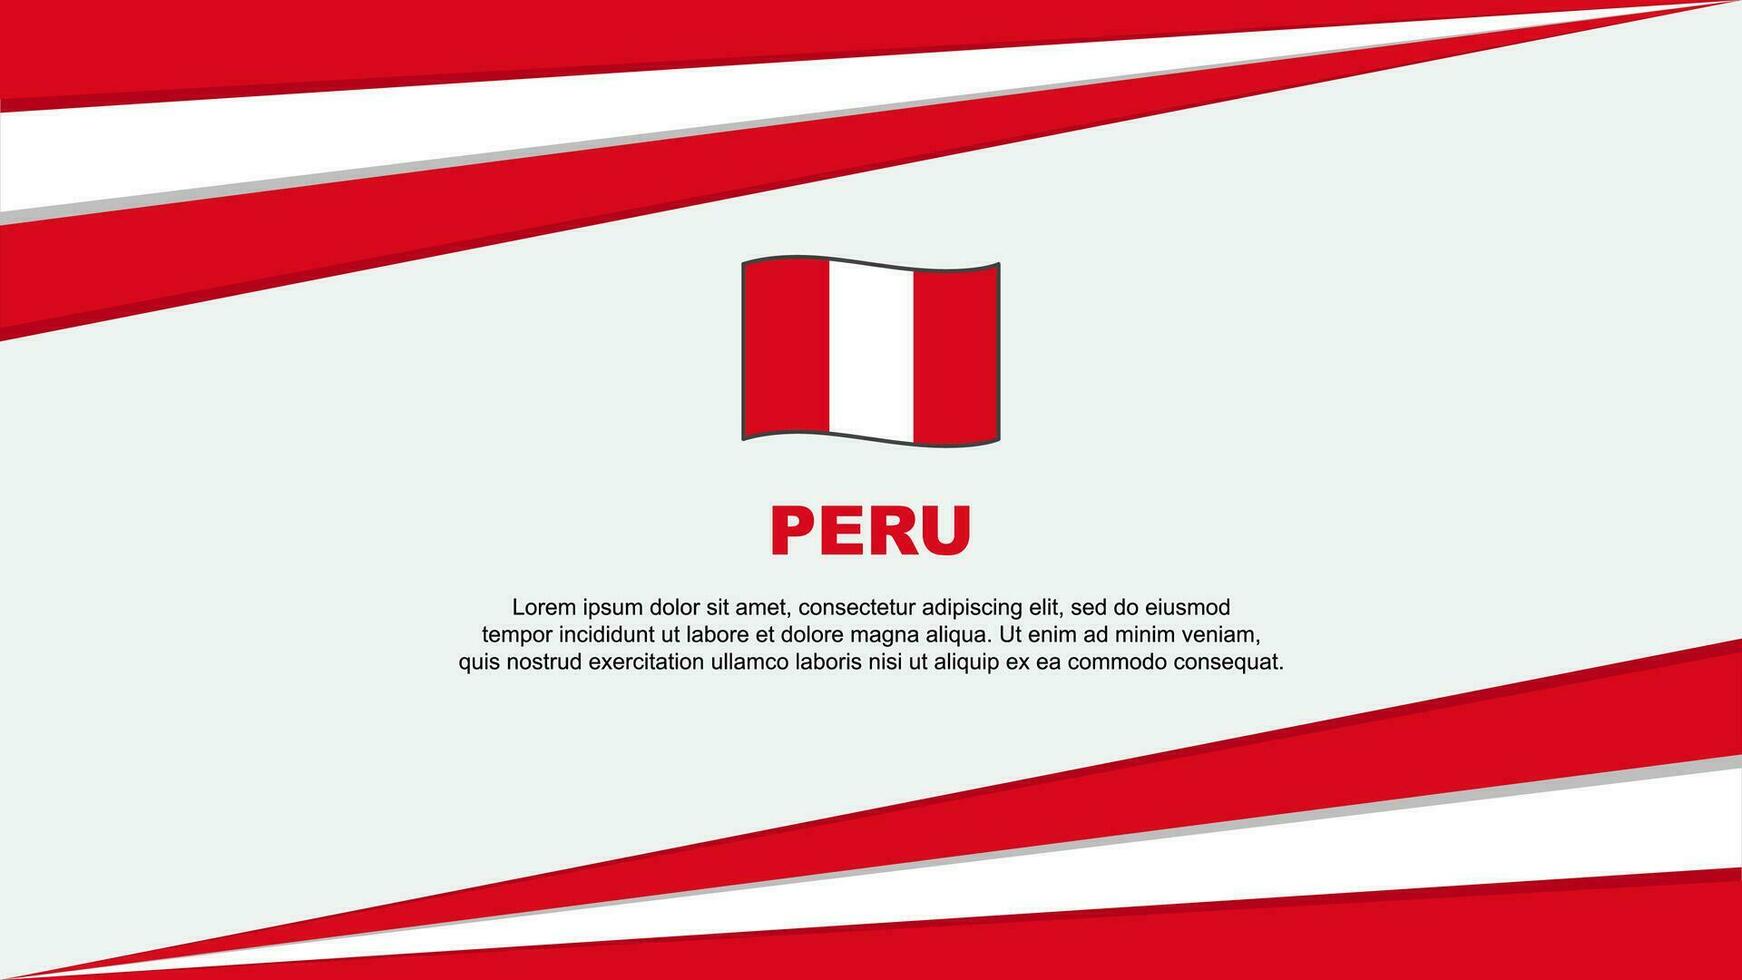 Peru Flag Abstract Background Design Template. Peru Independence Day Banner Cartoon Vector Illustration. Peru Design